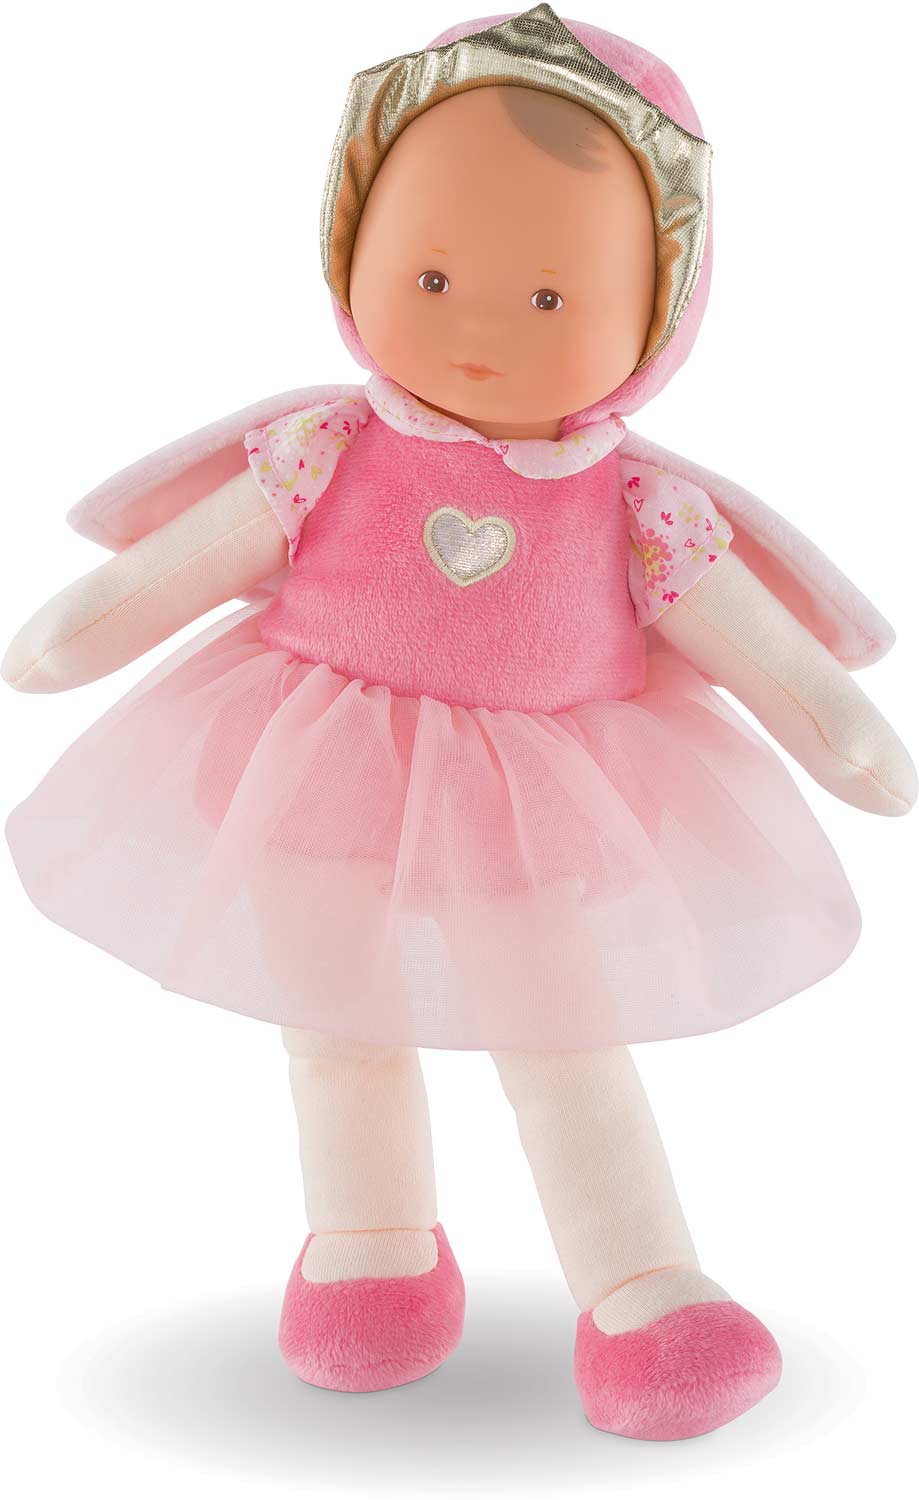 Corolle Mon Doudou Corolle Princess Pink Cotton Flower - The Toy